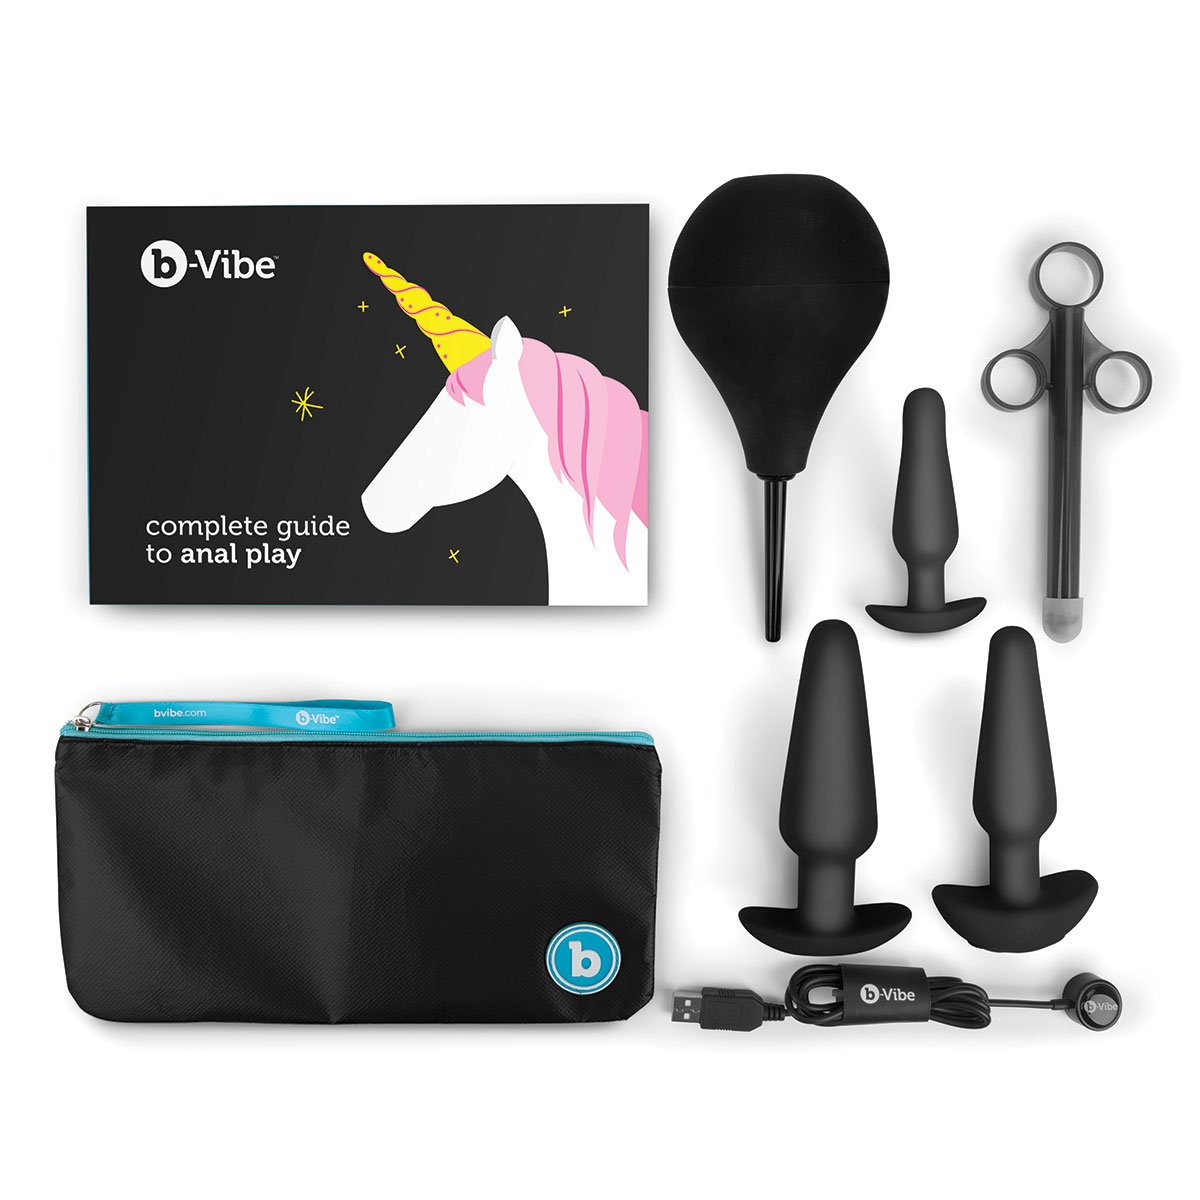 B-Vibe Anal Training Set - Buy At Luxury Toy X - Free 3-Day Shipping